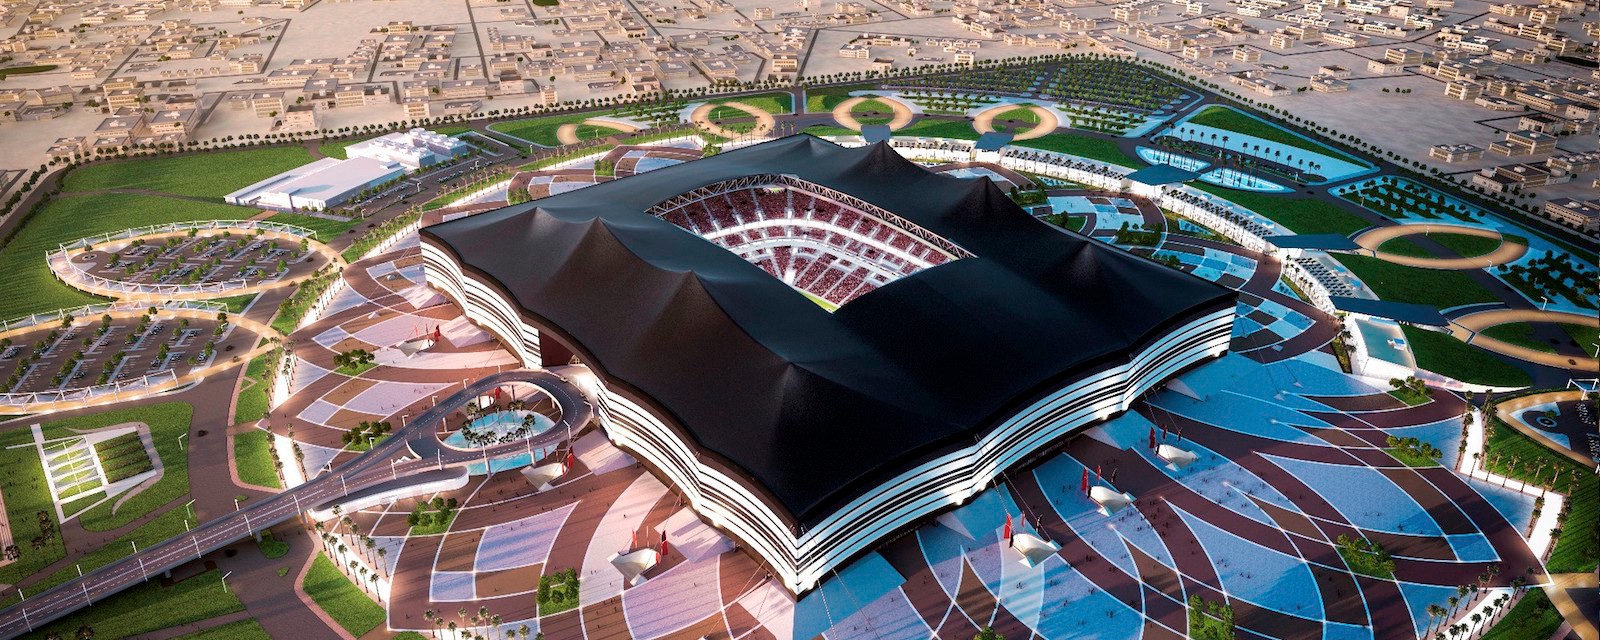 Rending of the future Al Bayt Stadium in Qatar